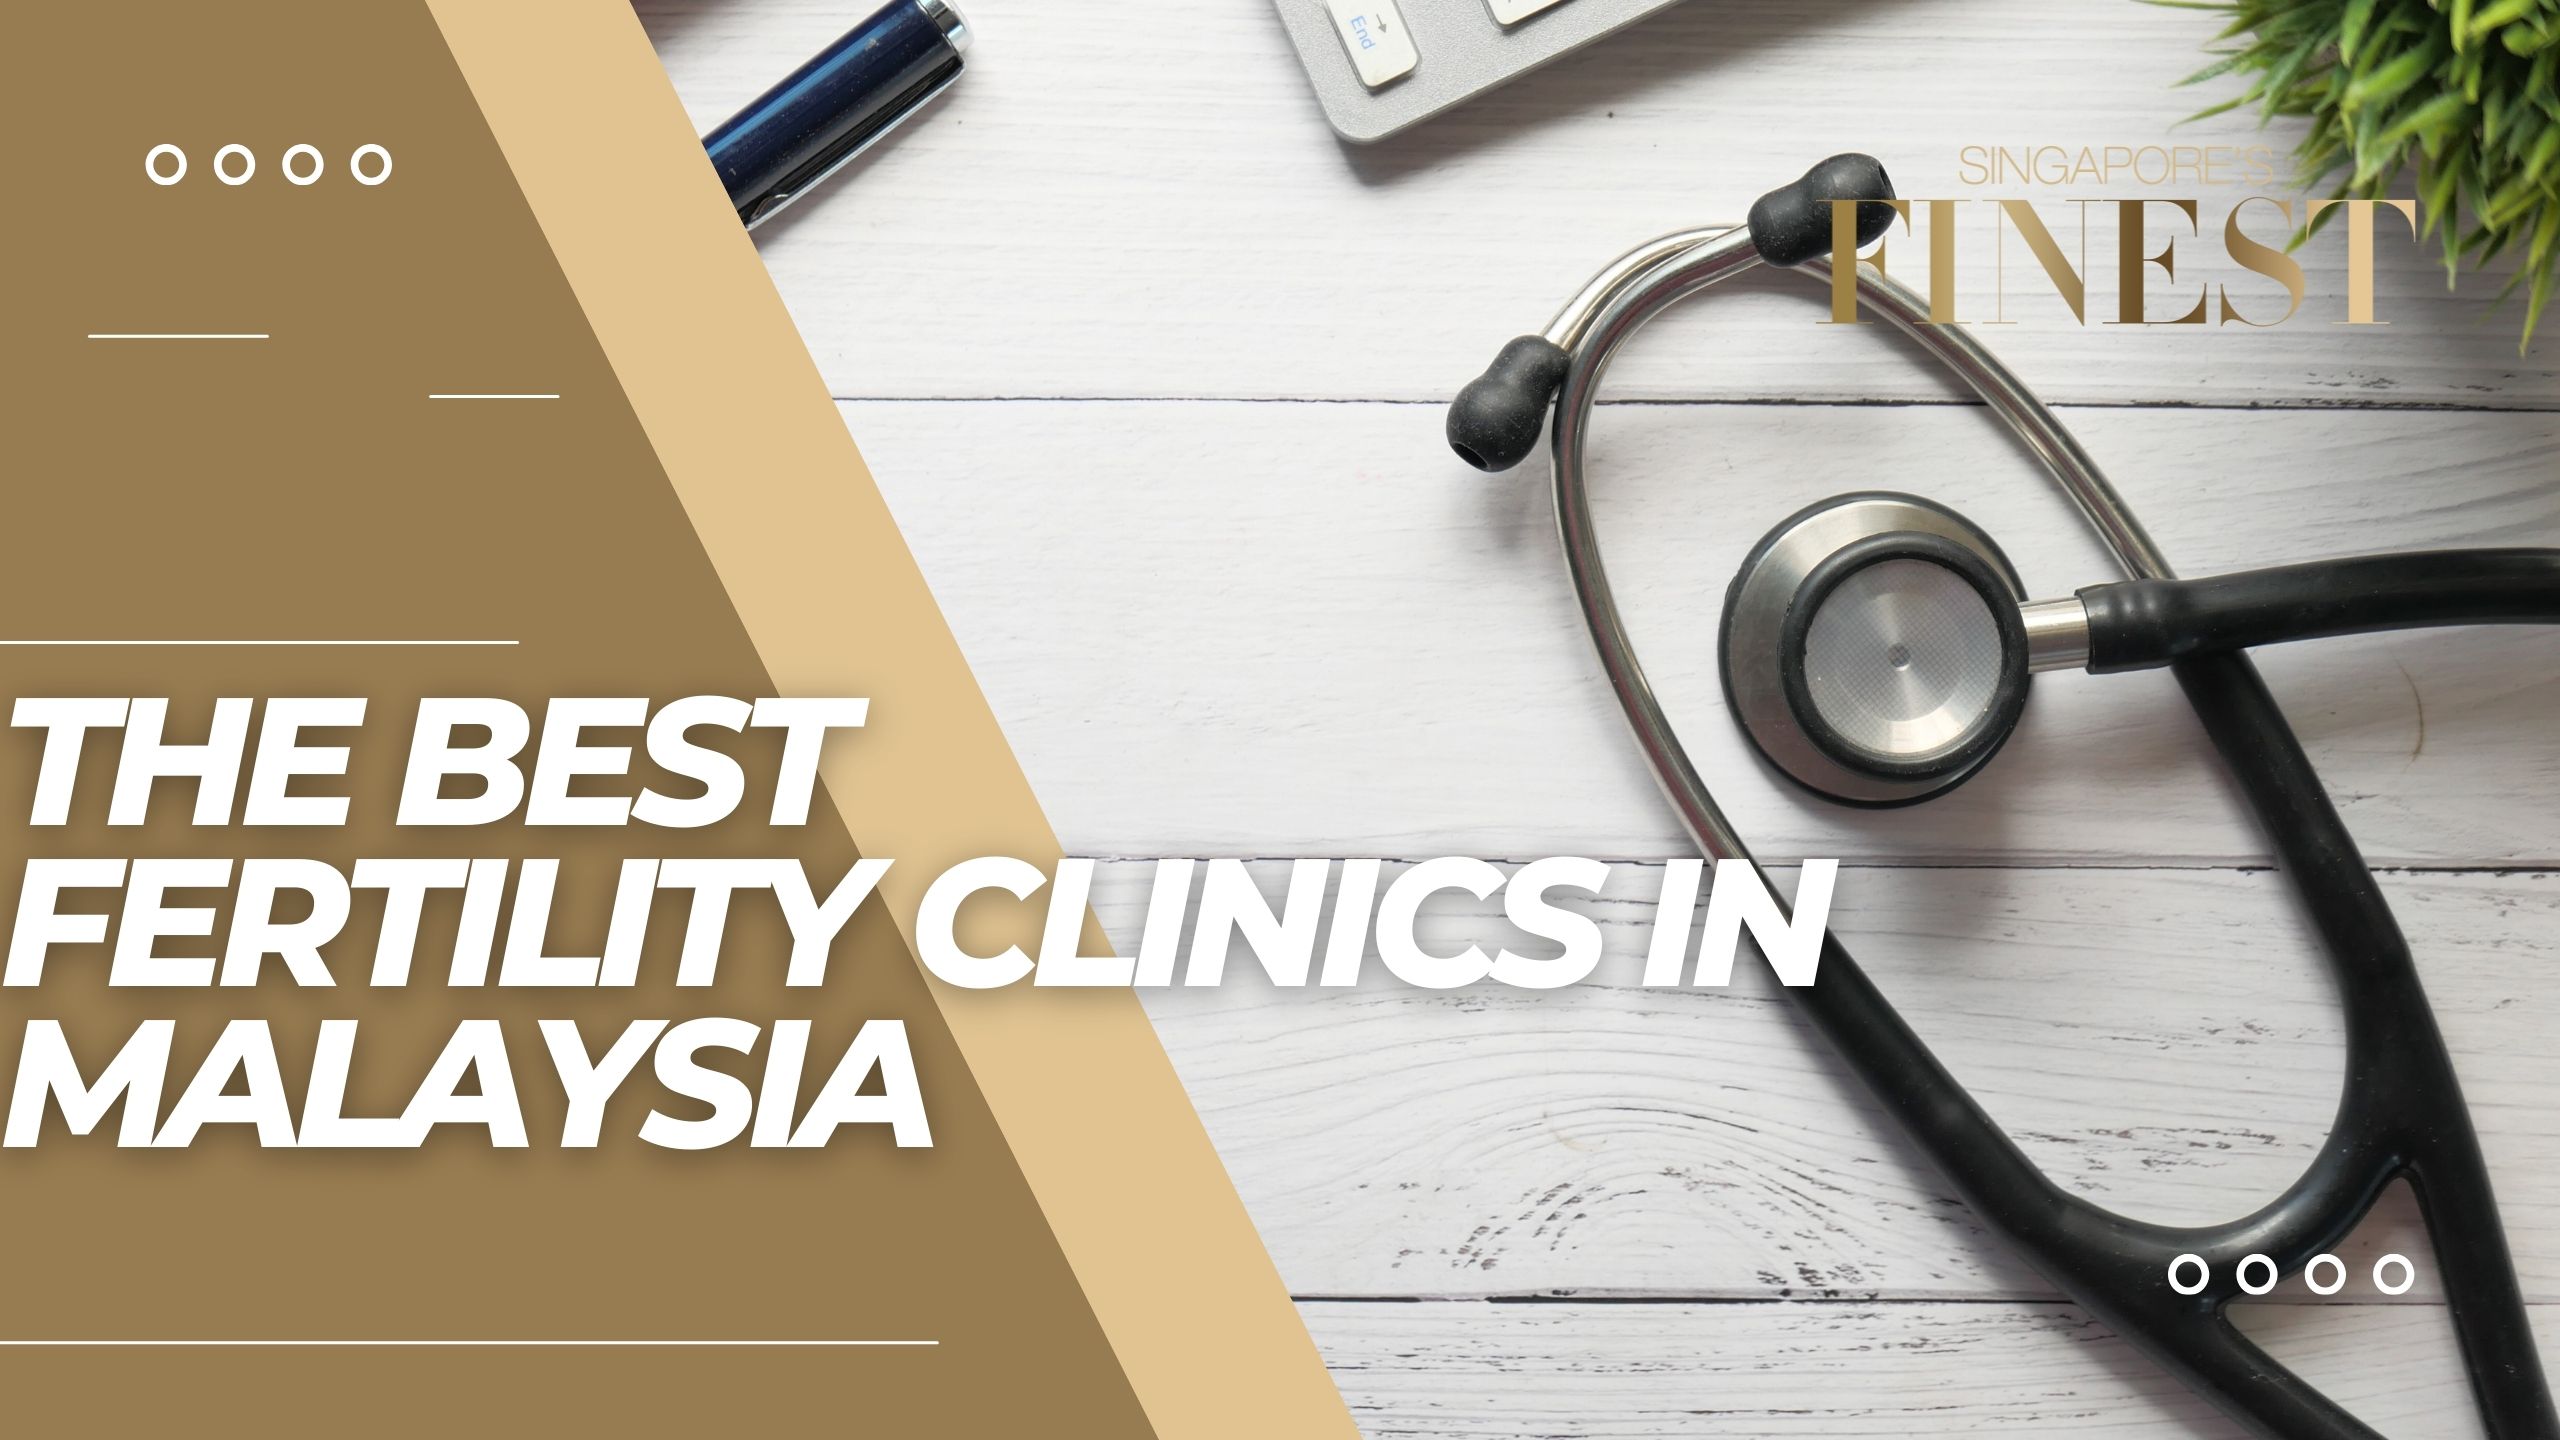 The Finest Fertility Clinics in Malaysia